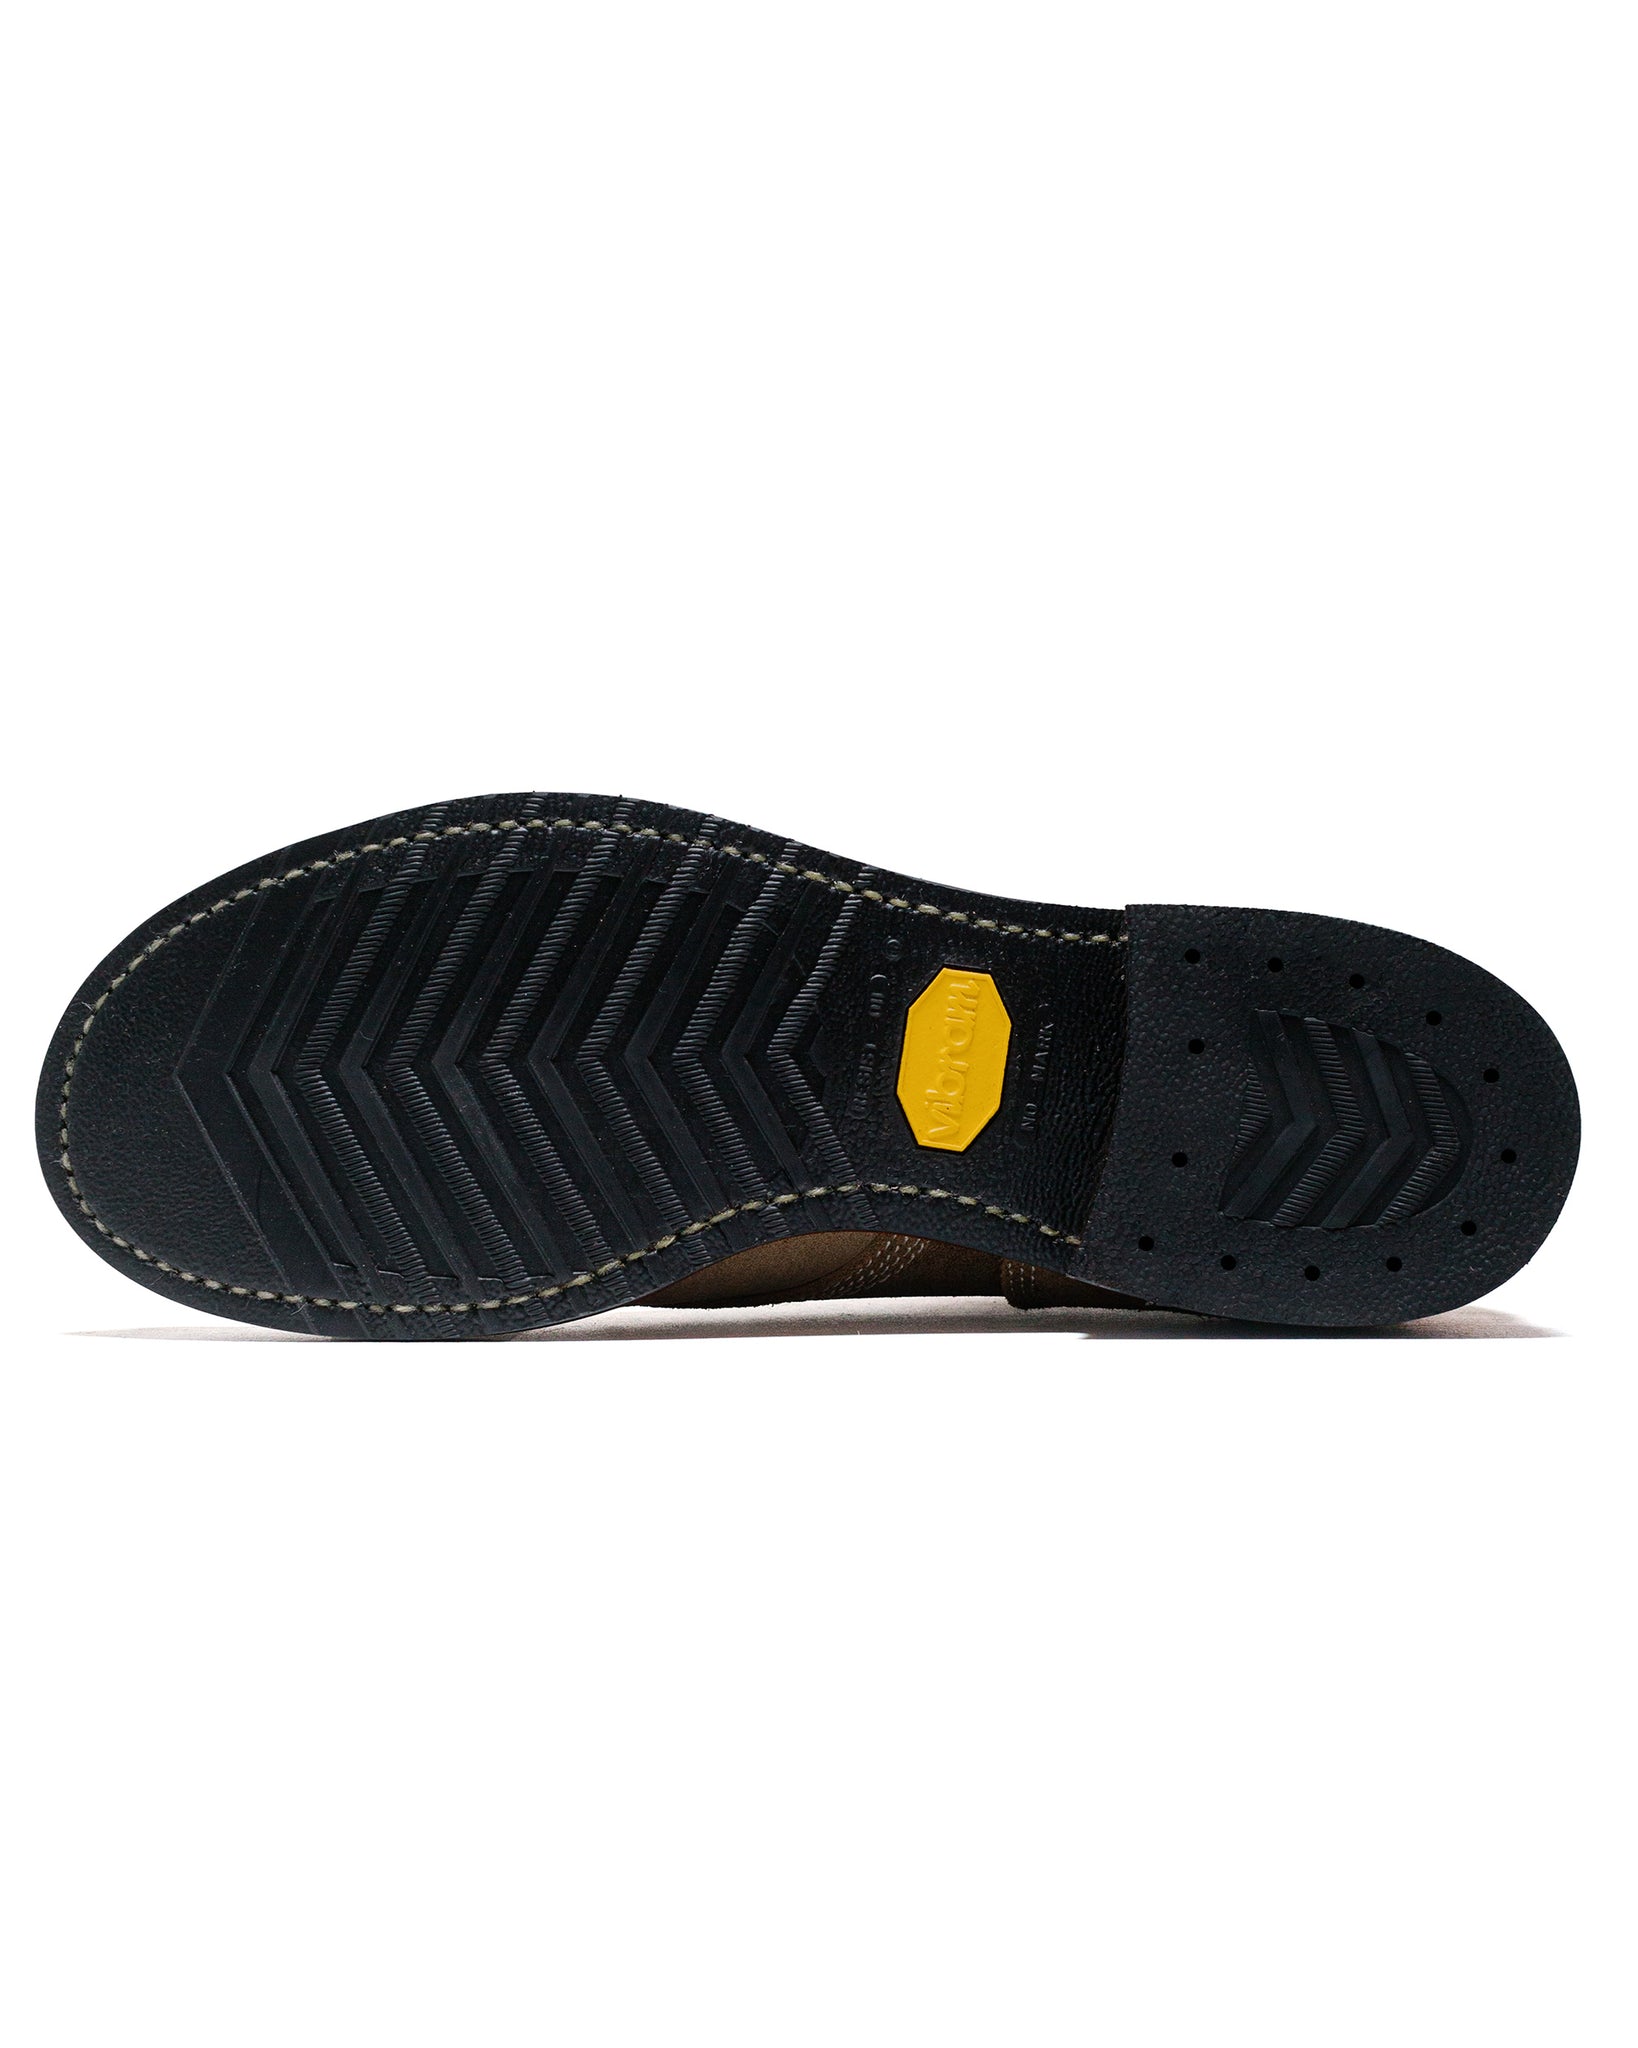 John Lofgren Bootmaker M-43 Service Shoes Horween Leather CXL Natural Roughout sole